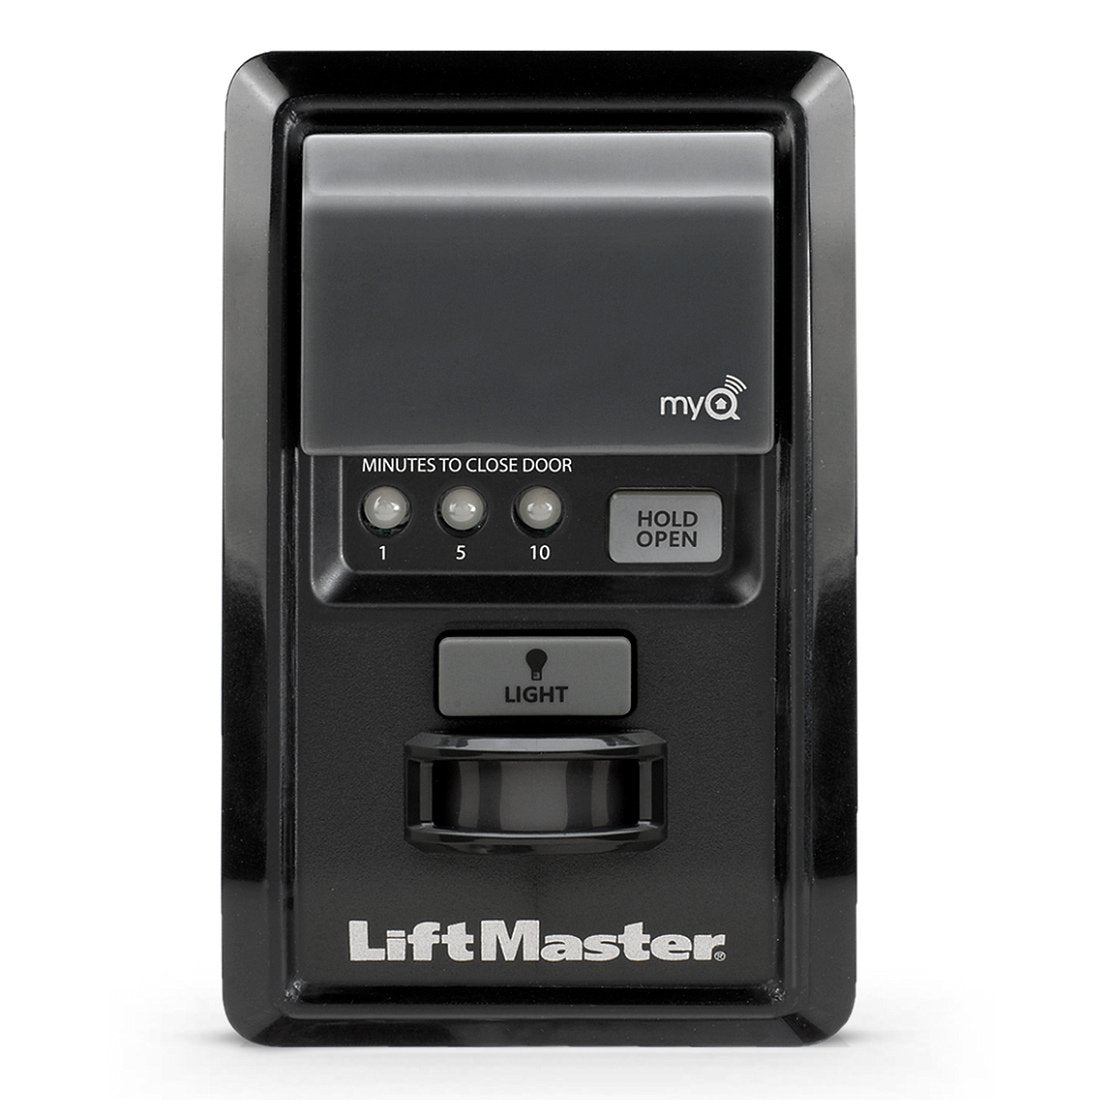 LiftMaster 825LM MyQ Remote Control Lights Control